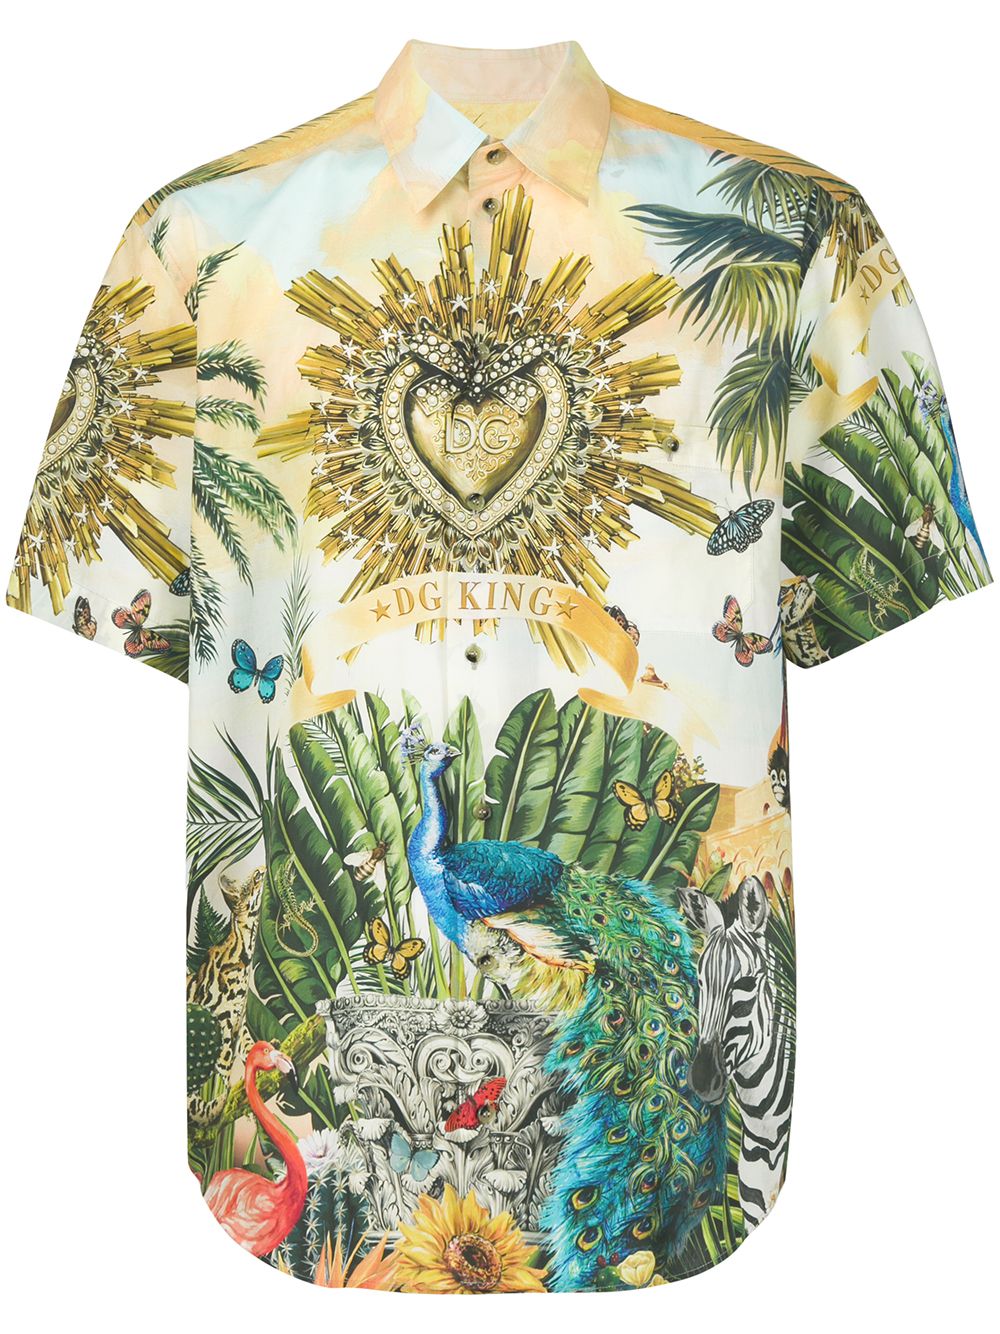 фото Dolce & Gabbana рубашка с принтом Jungle